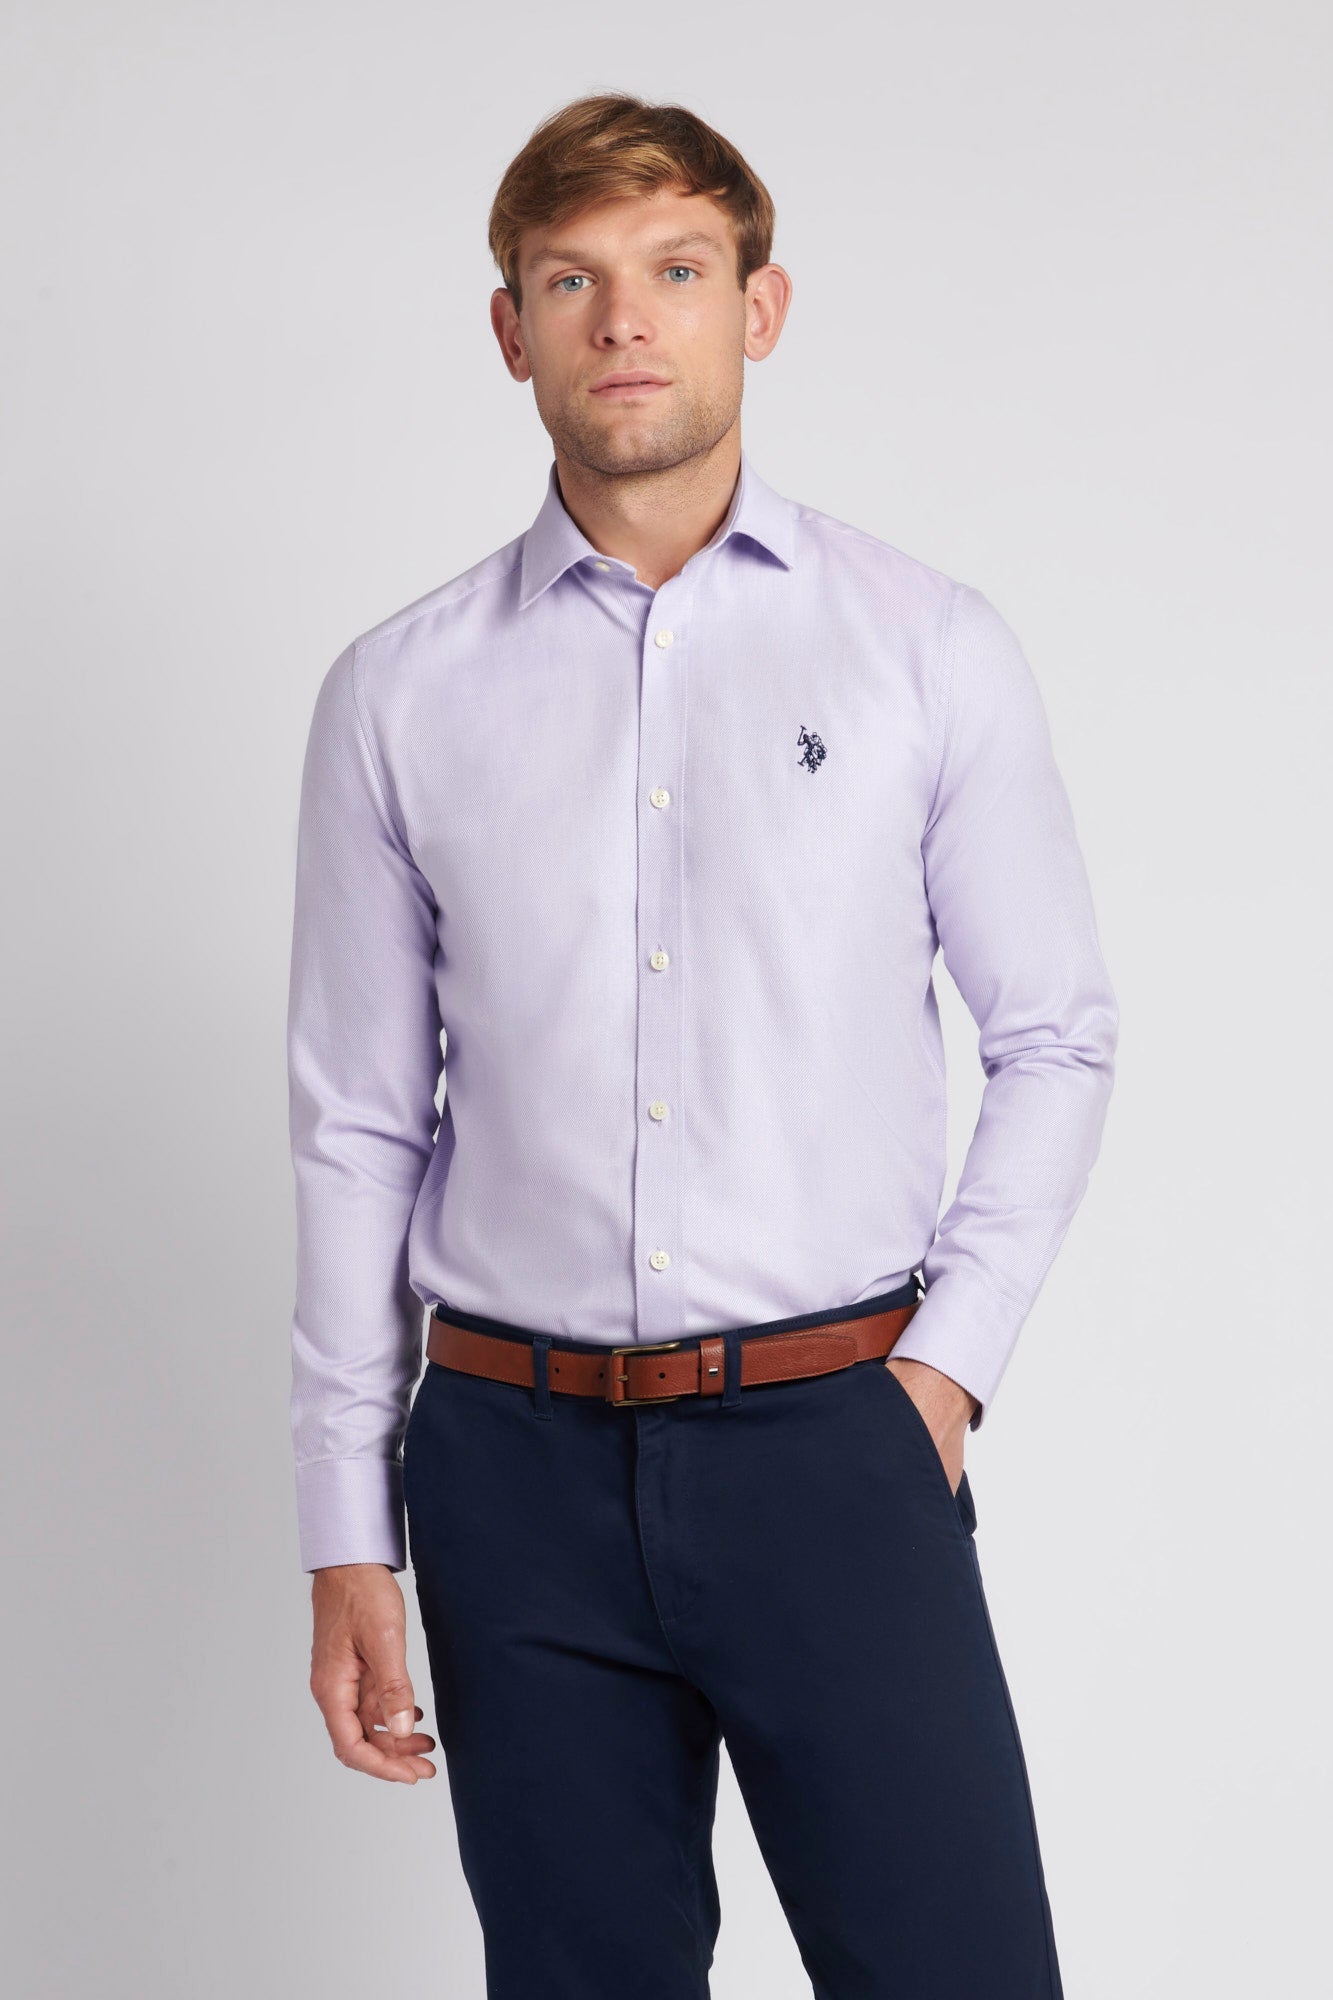 U.S. Polo Assn. Mens Long Sleeve Royal Twill Shirt in Pastel Lilac